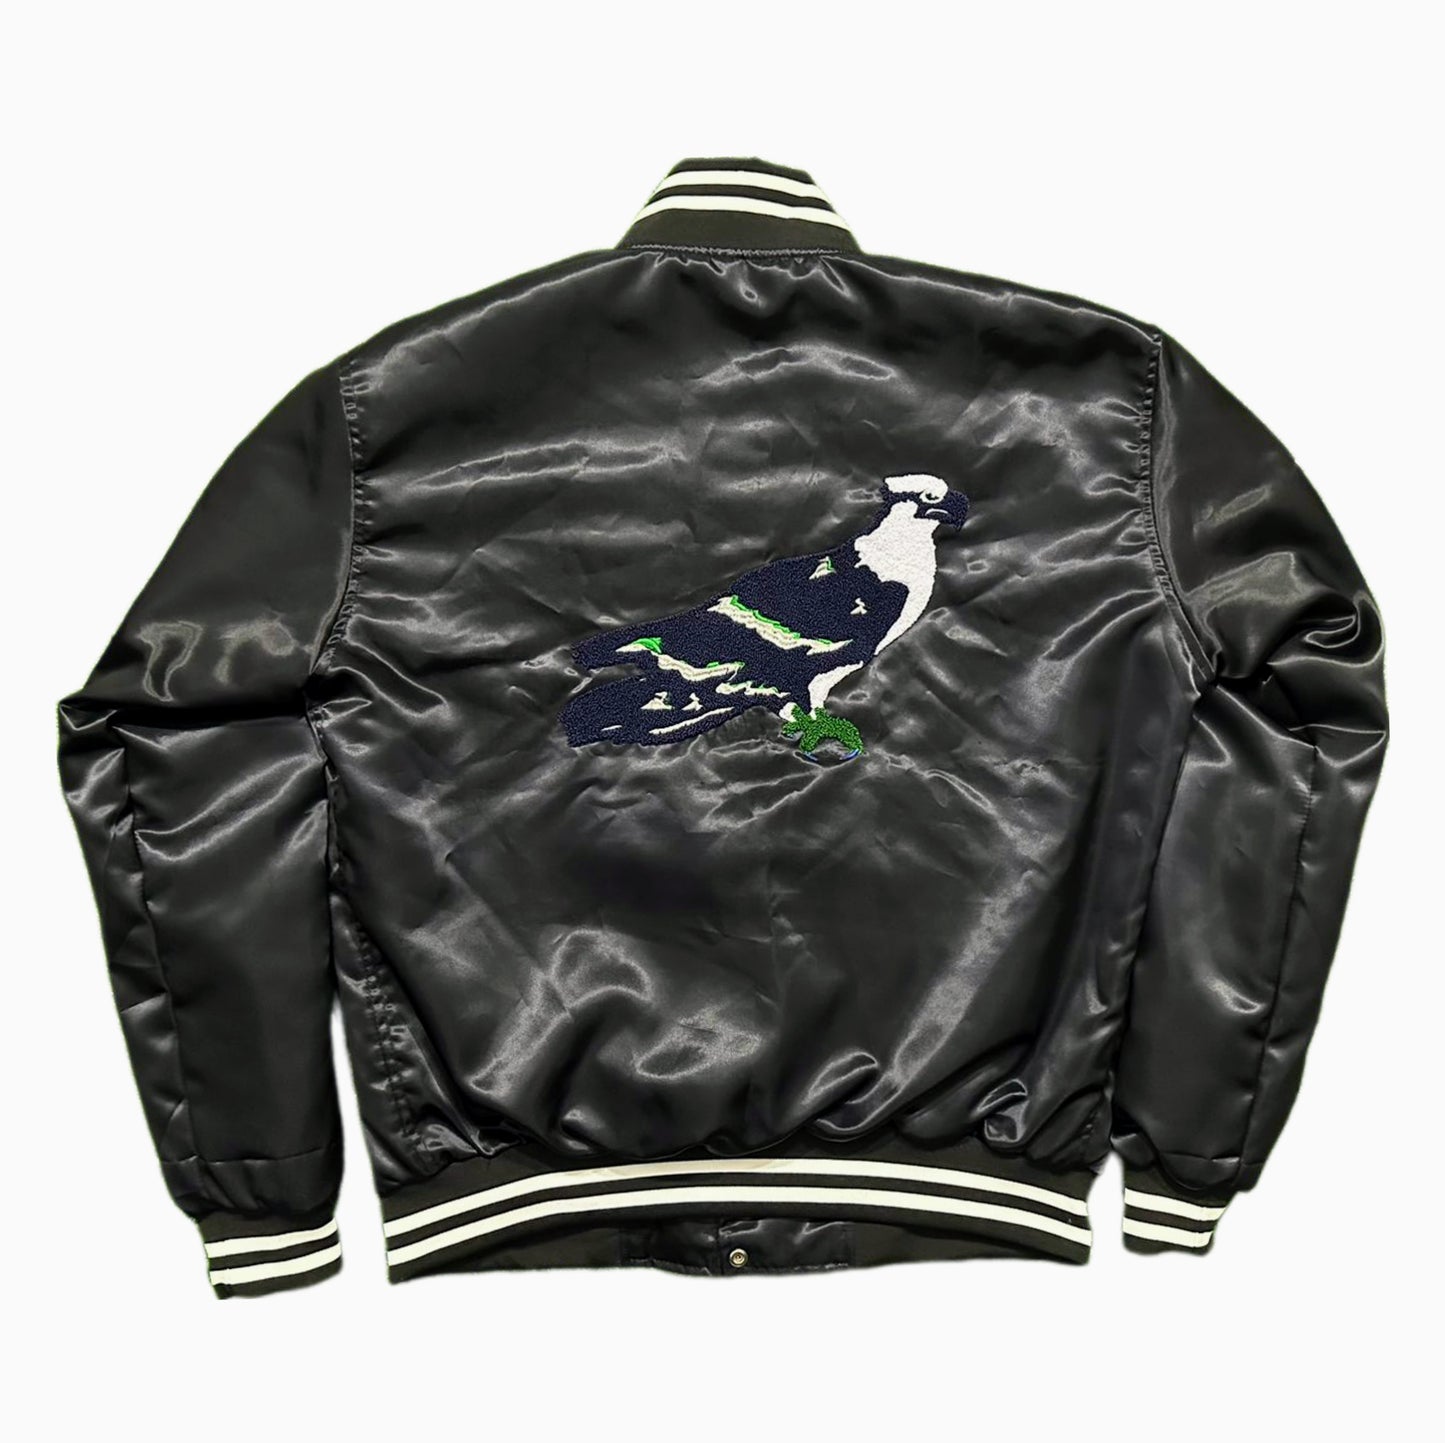 Hawksprey Sideline Jacket - Black